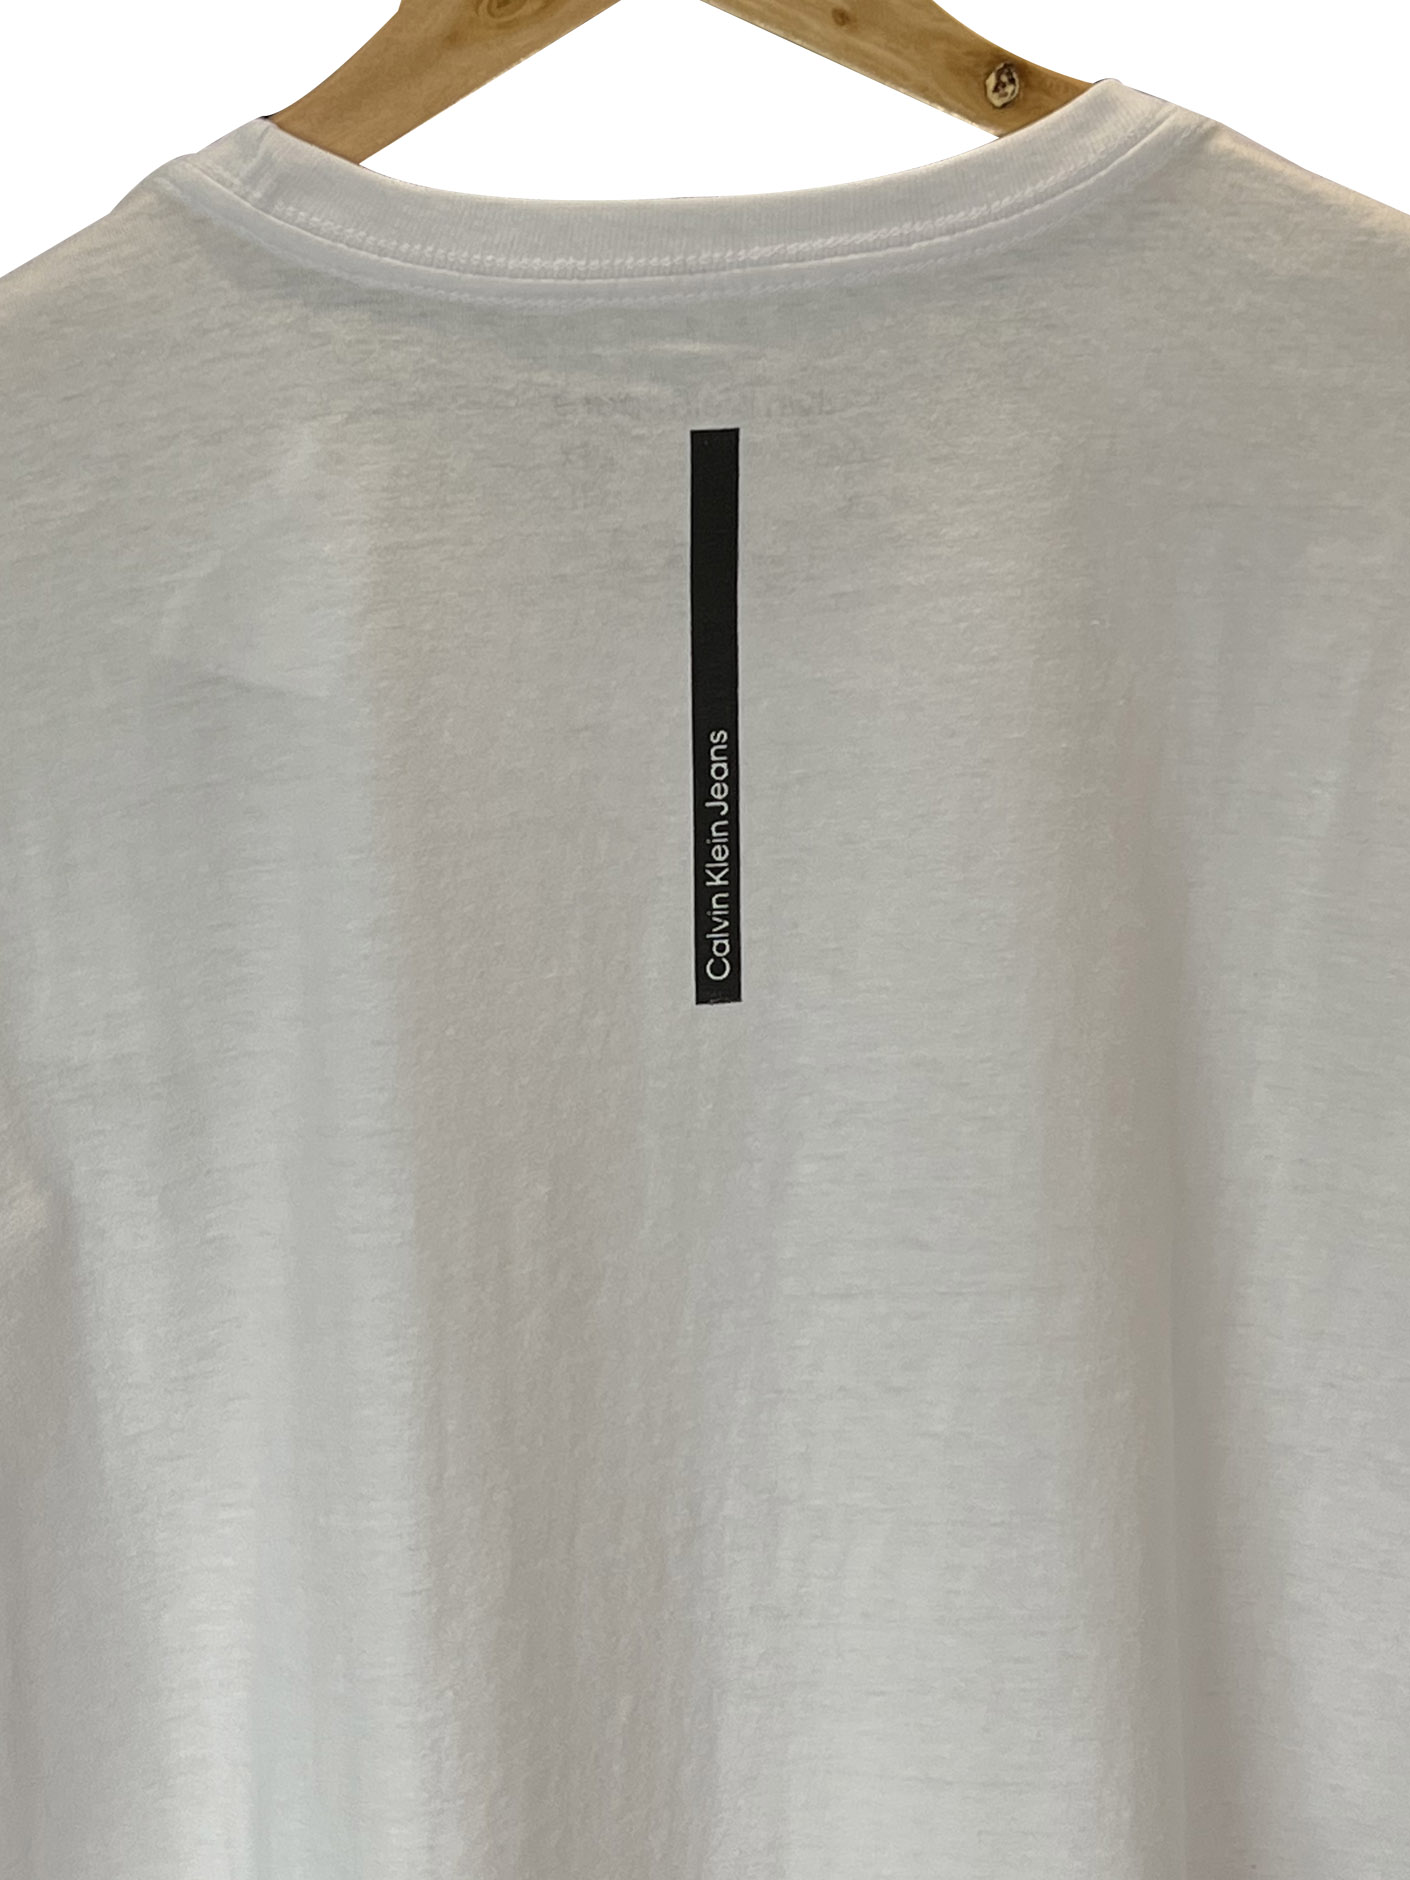 Camiseta Calvin Klein Jeans Masculina Branca